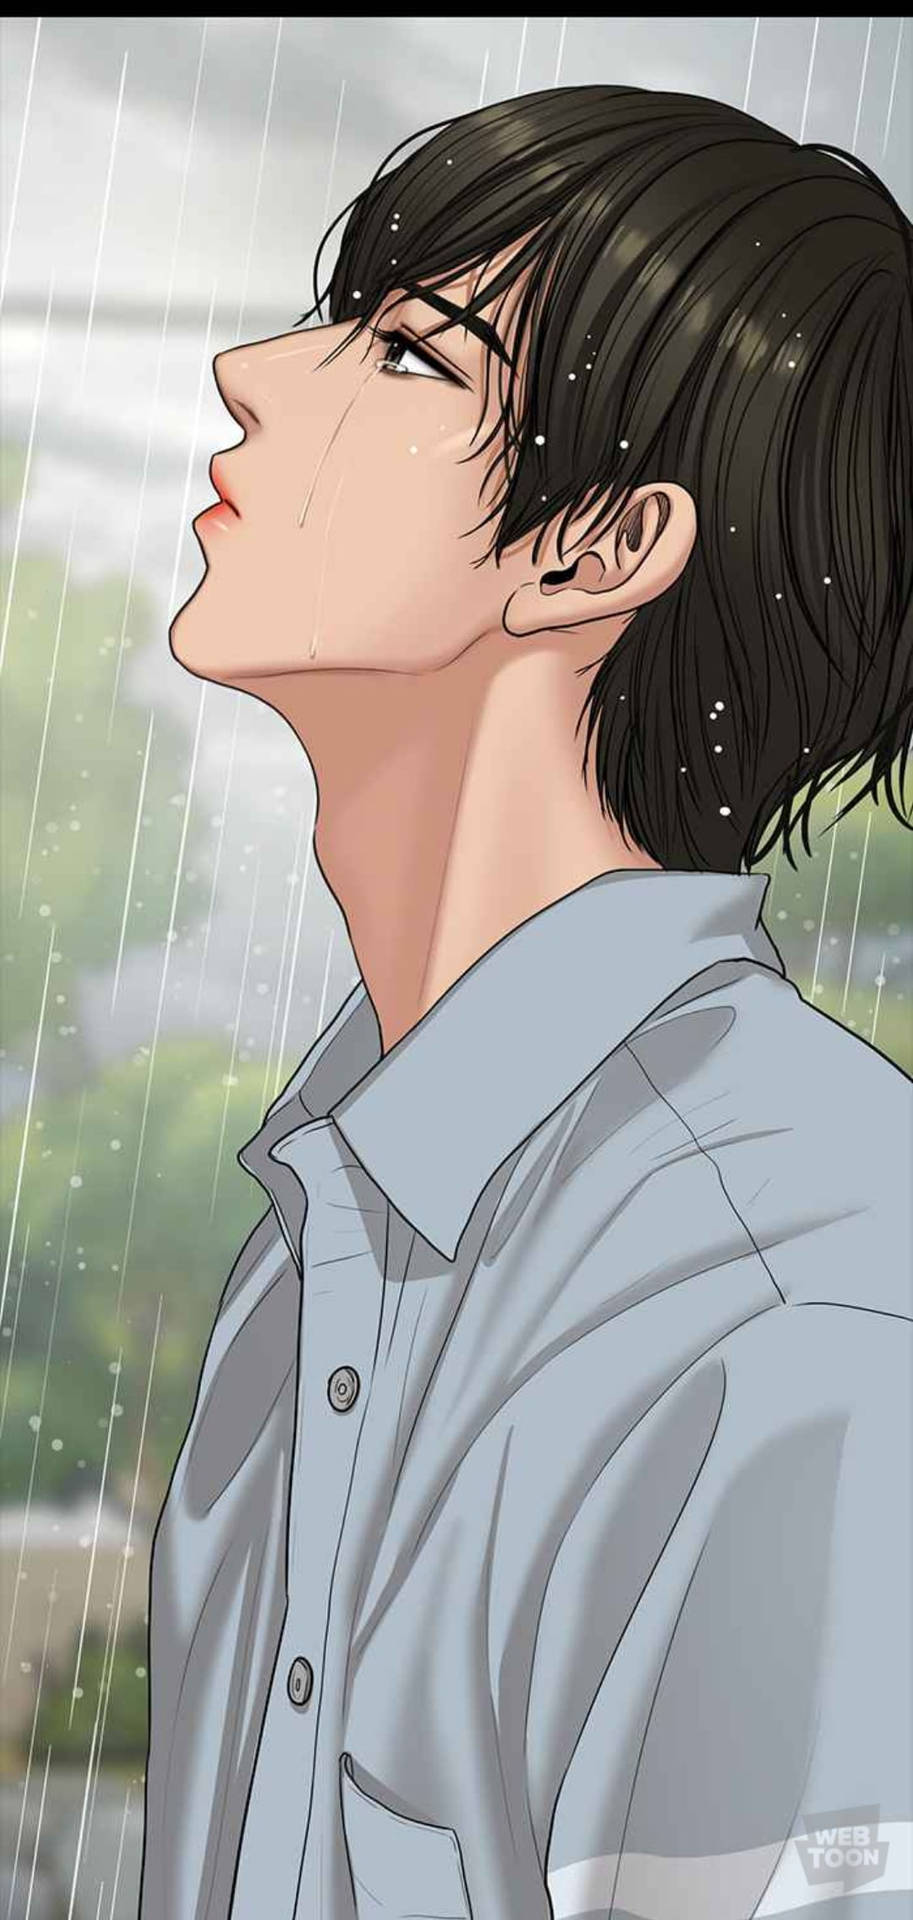 Sad Boy Anime Under The Rain Wallpaper